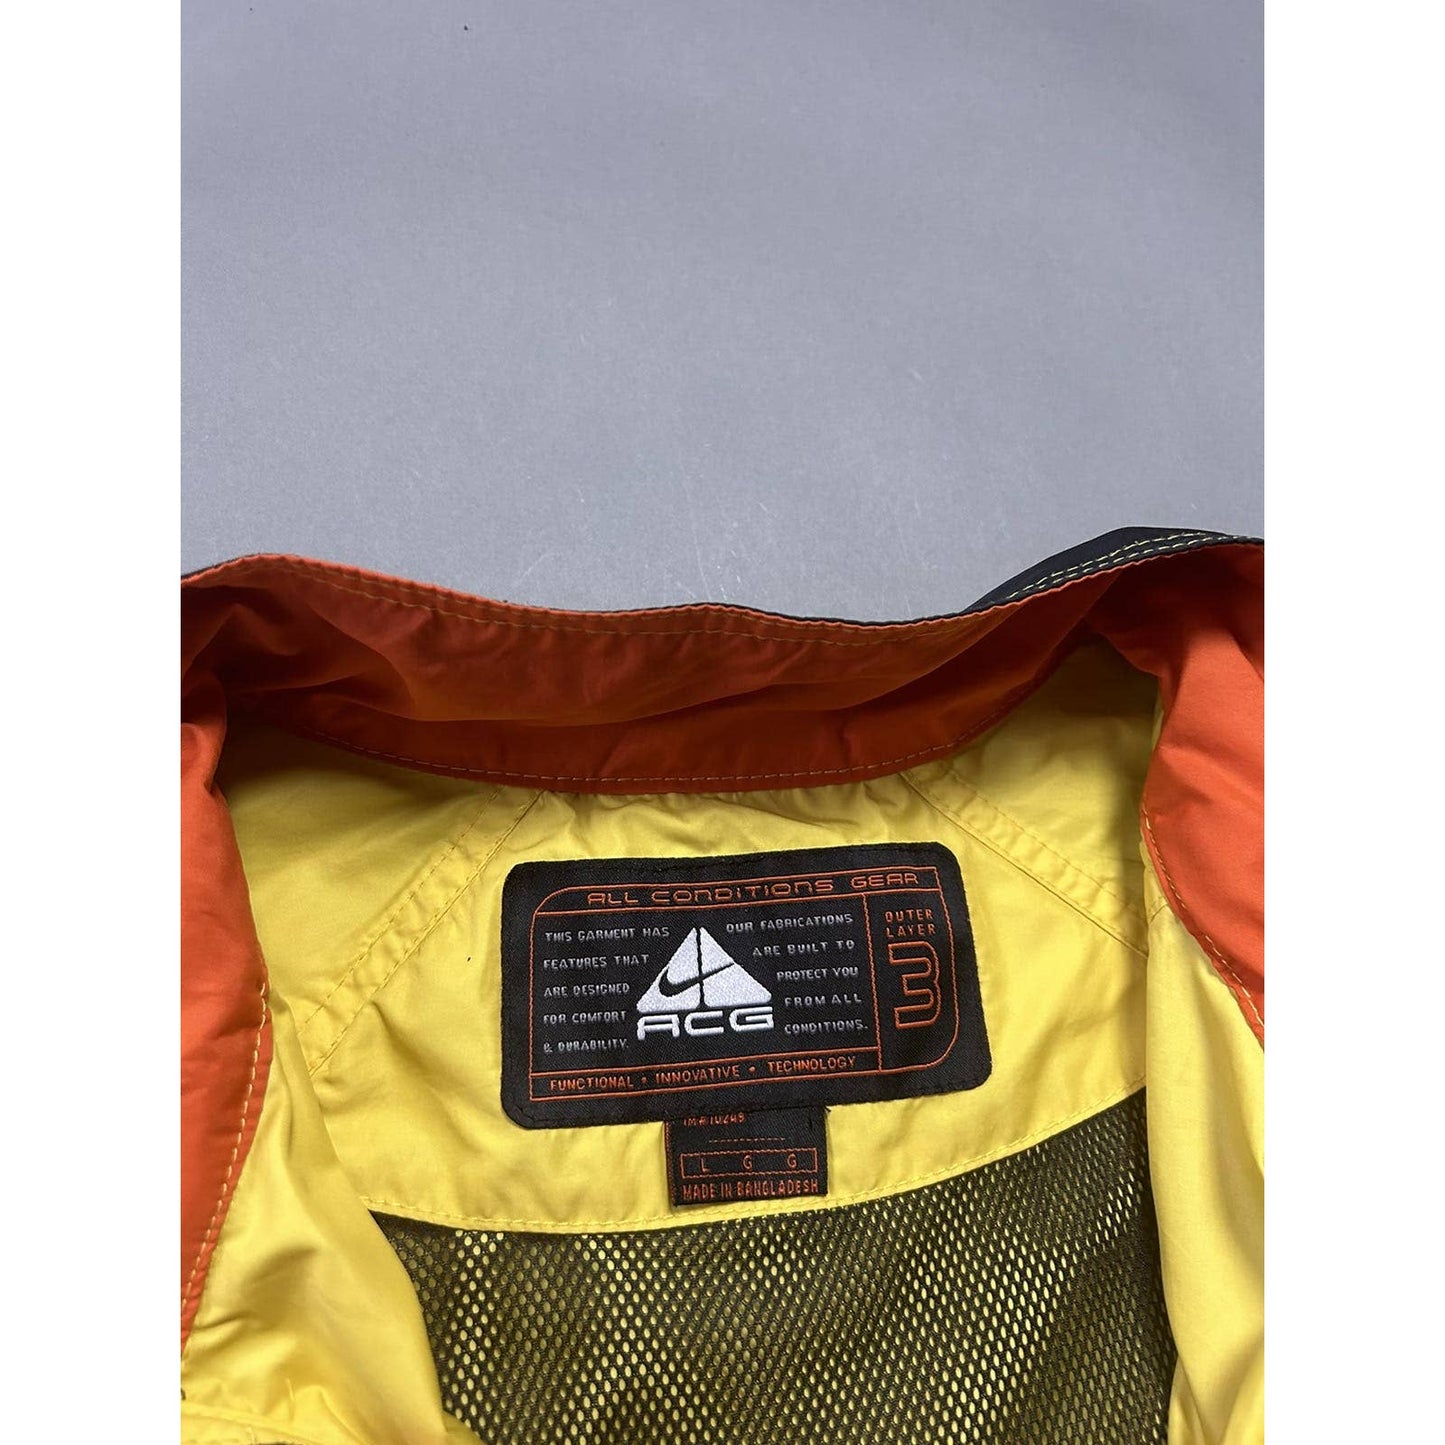 Nike ACG jacket vintage yellow 2000s windbreaker